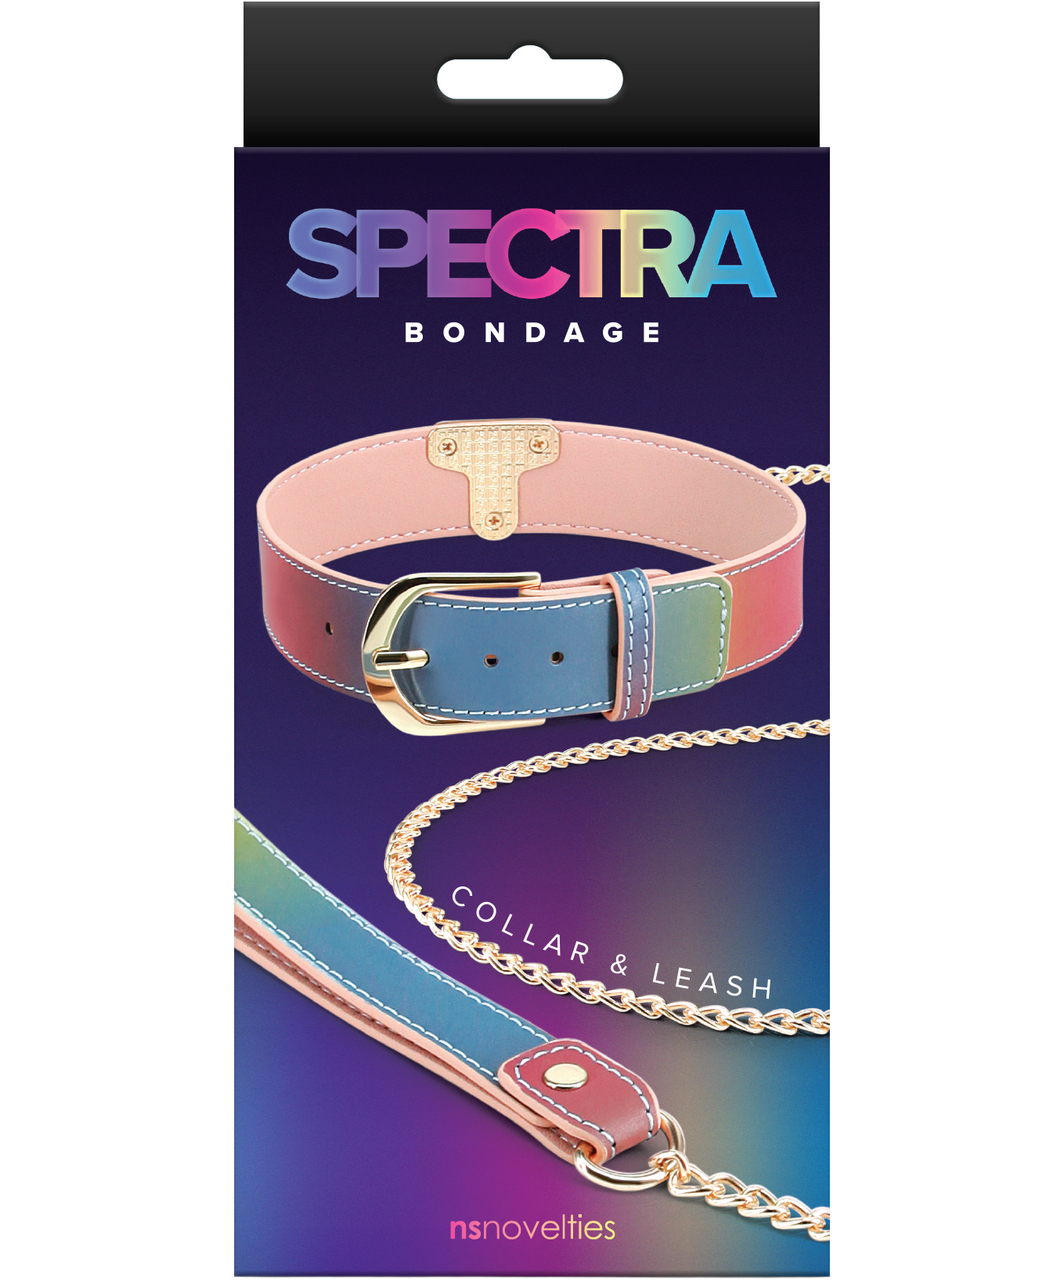 NS Novelties Spectra Bondage collar with leash